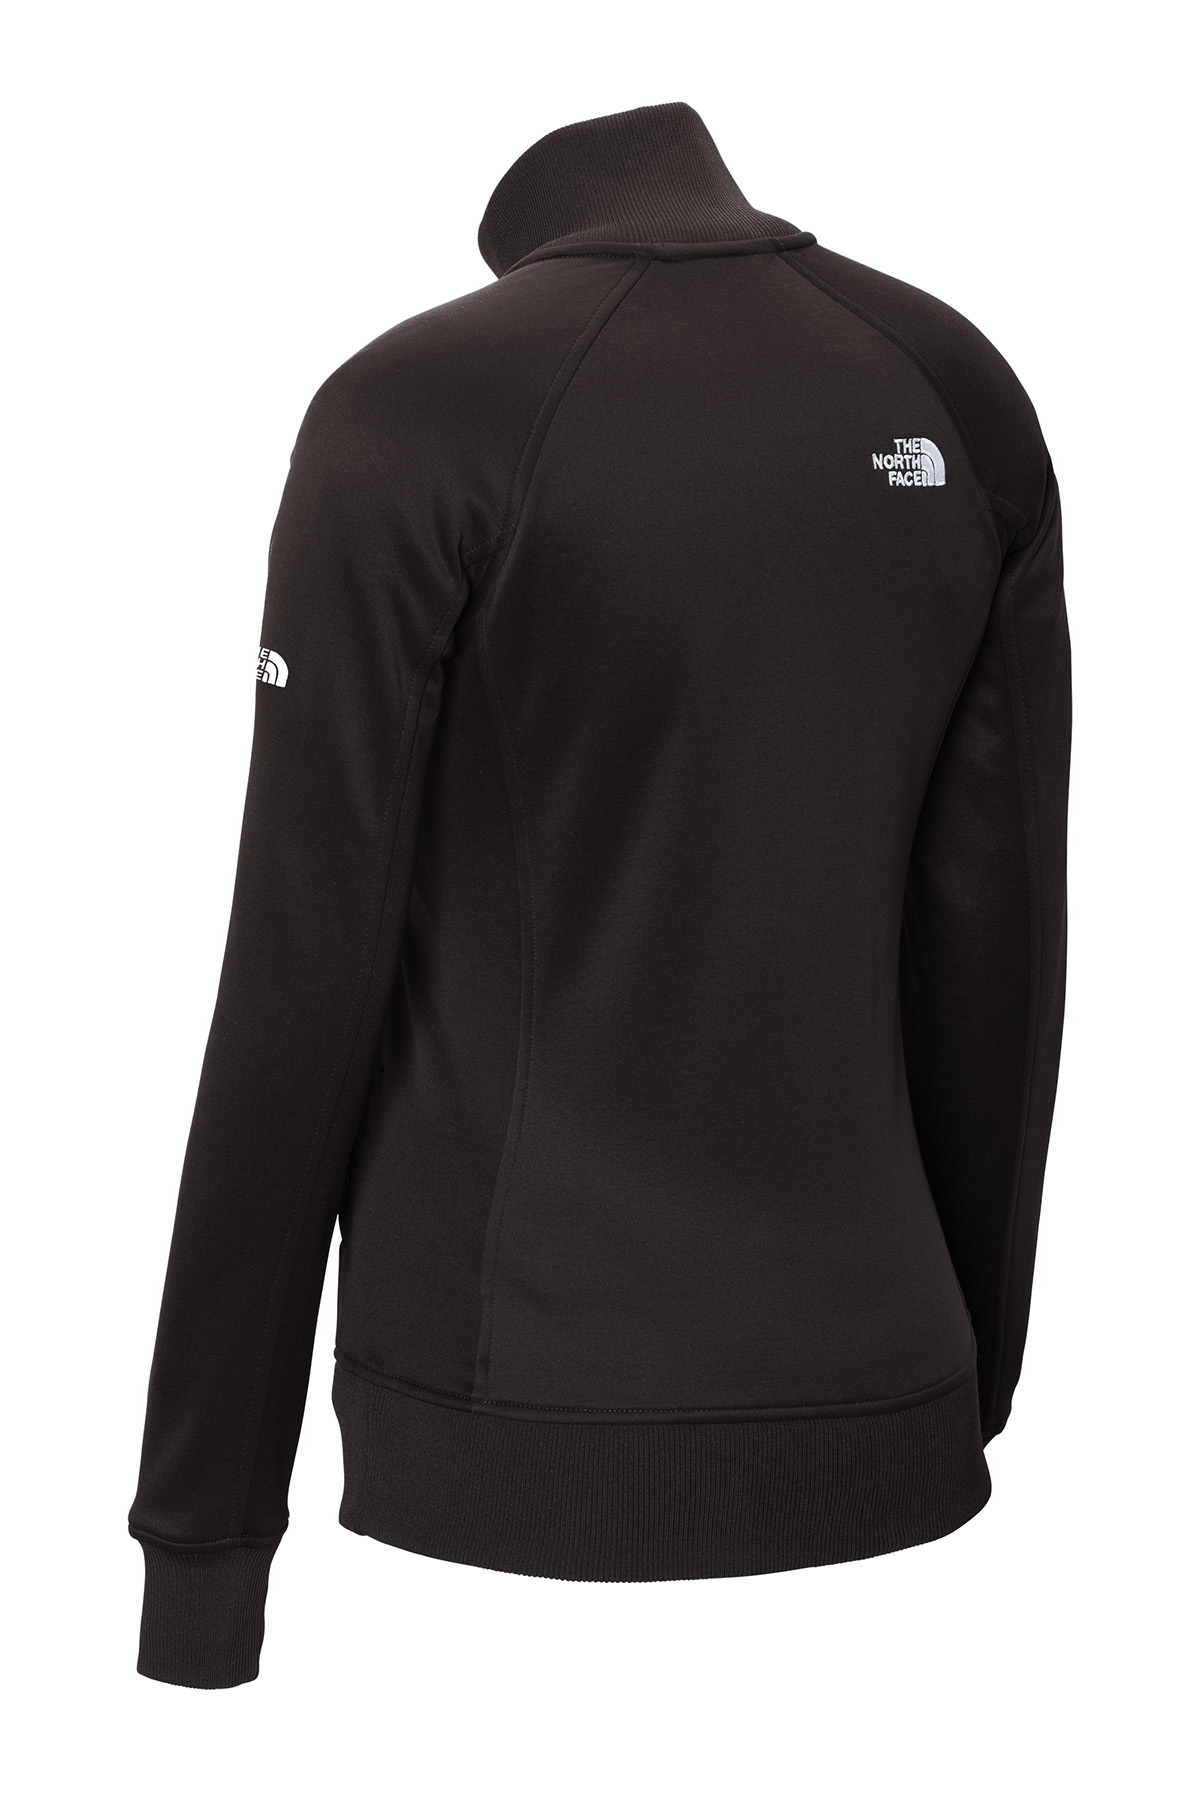 The North Face Ladies Tech Full-Zip Fleece Jacket | Product | SanMar